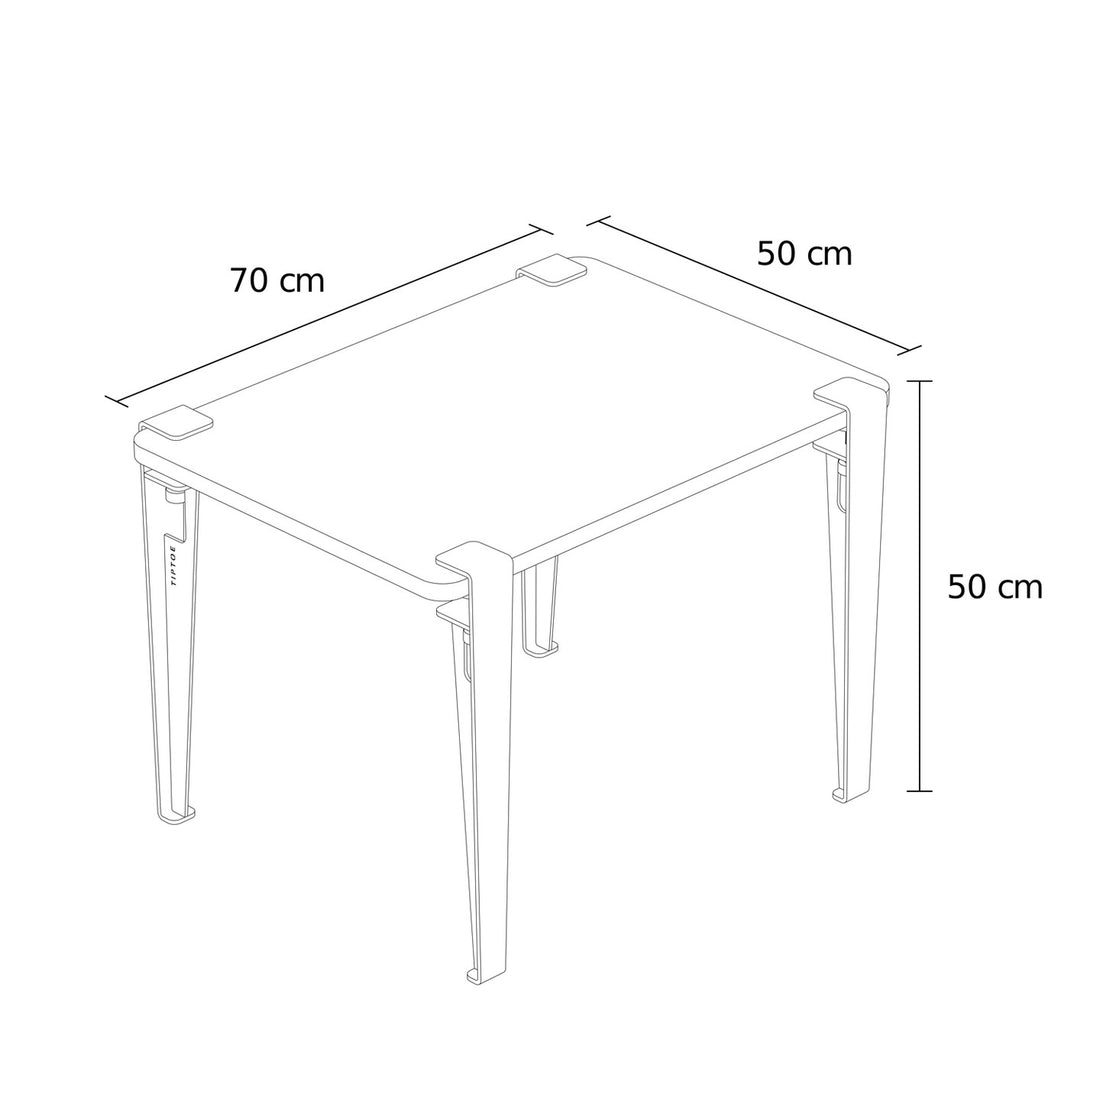 tiptoe-kids-table-leg-cloudy-white-50cm-tipt-tle050st1mz100- (16)